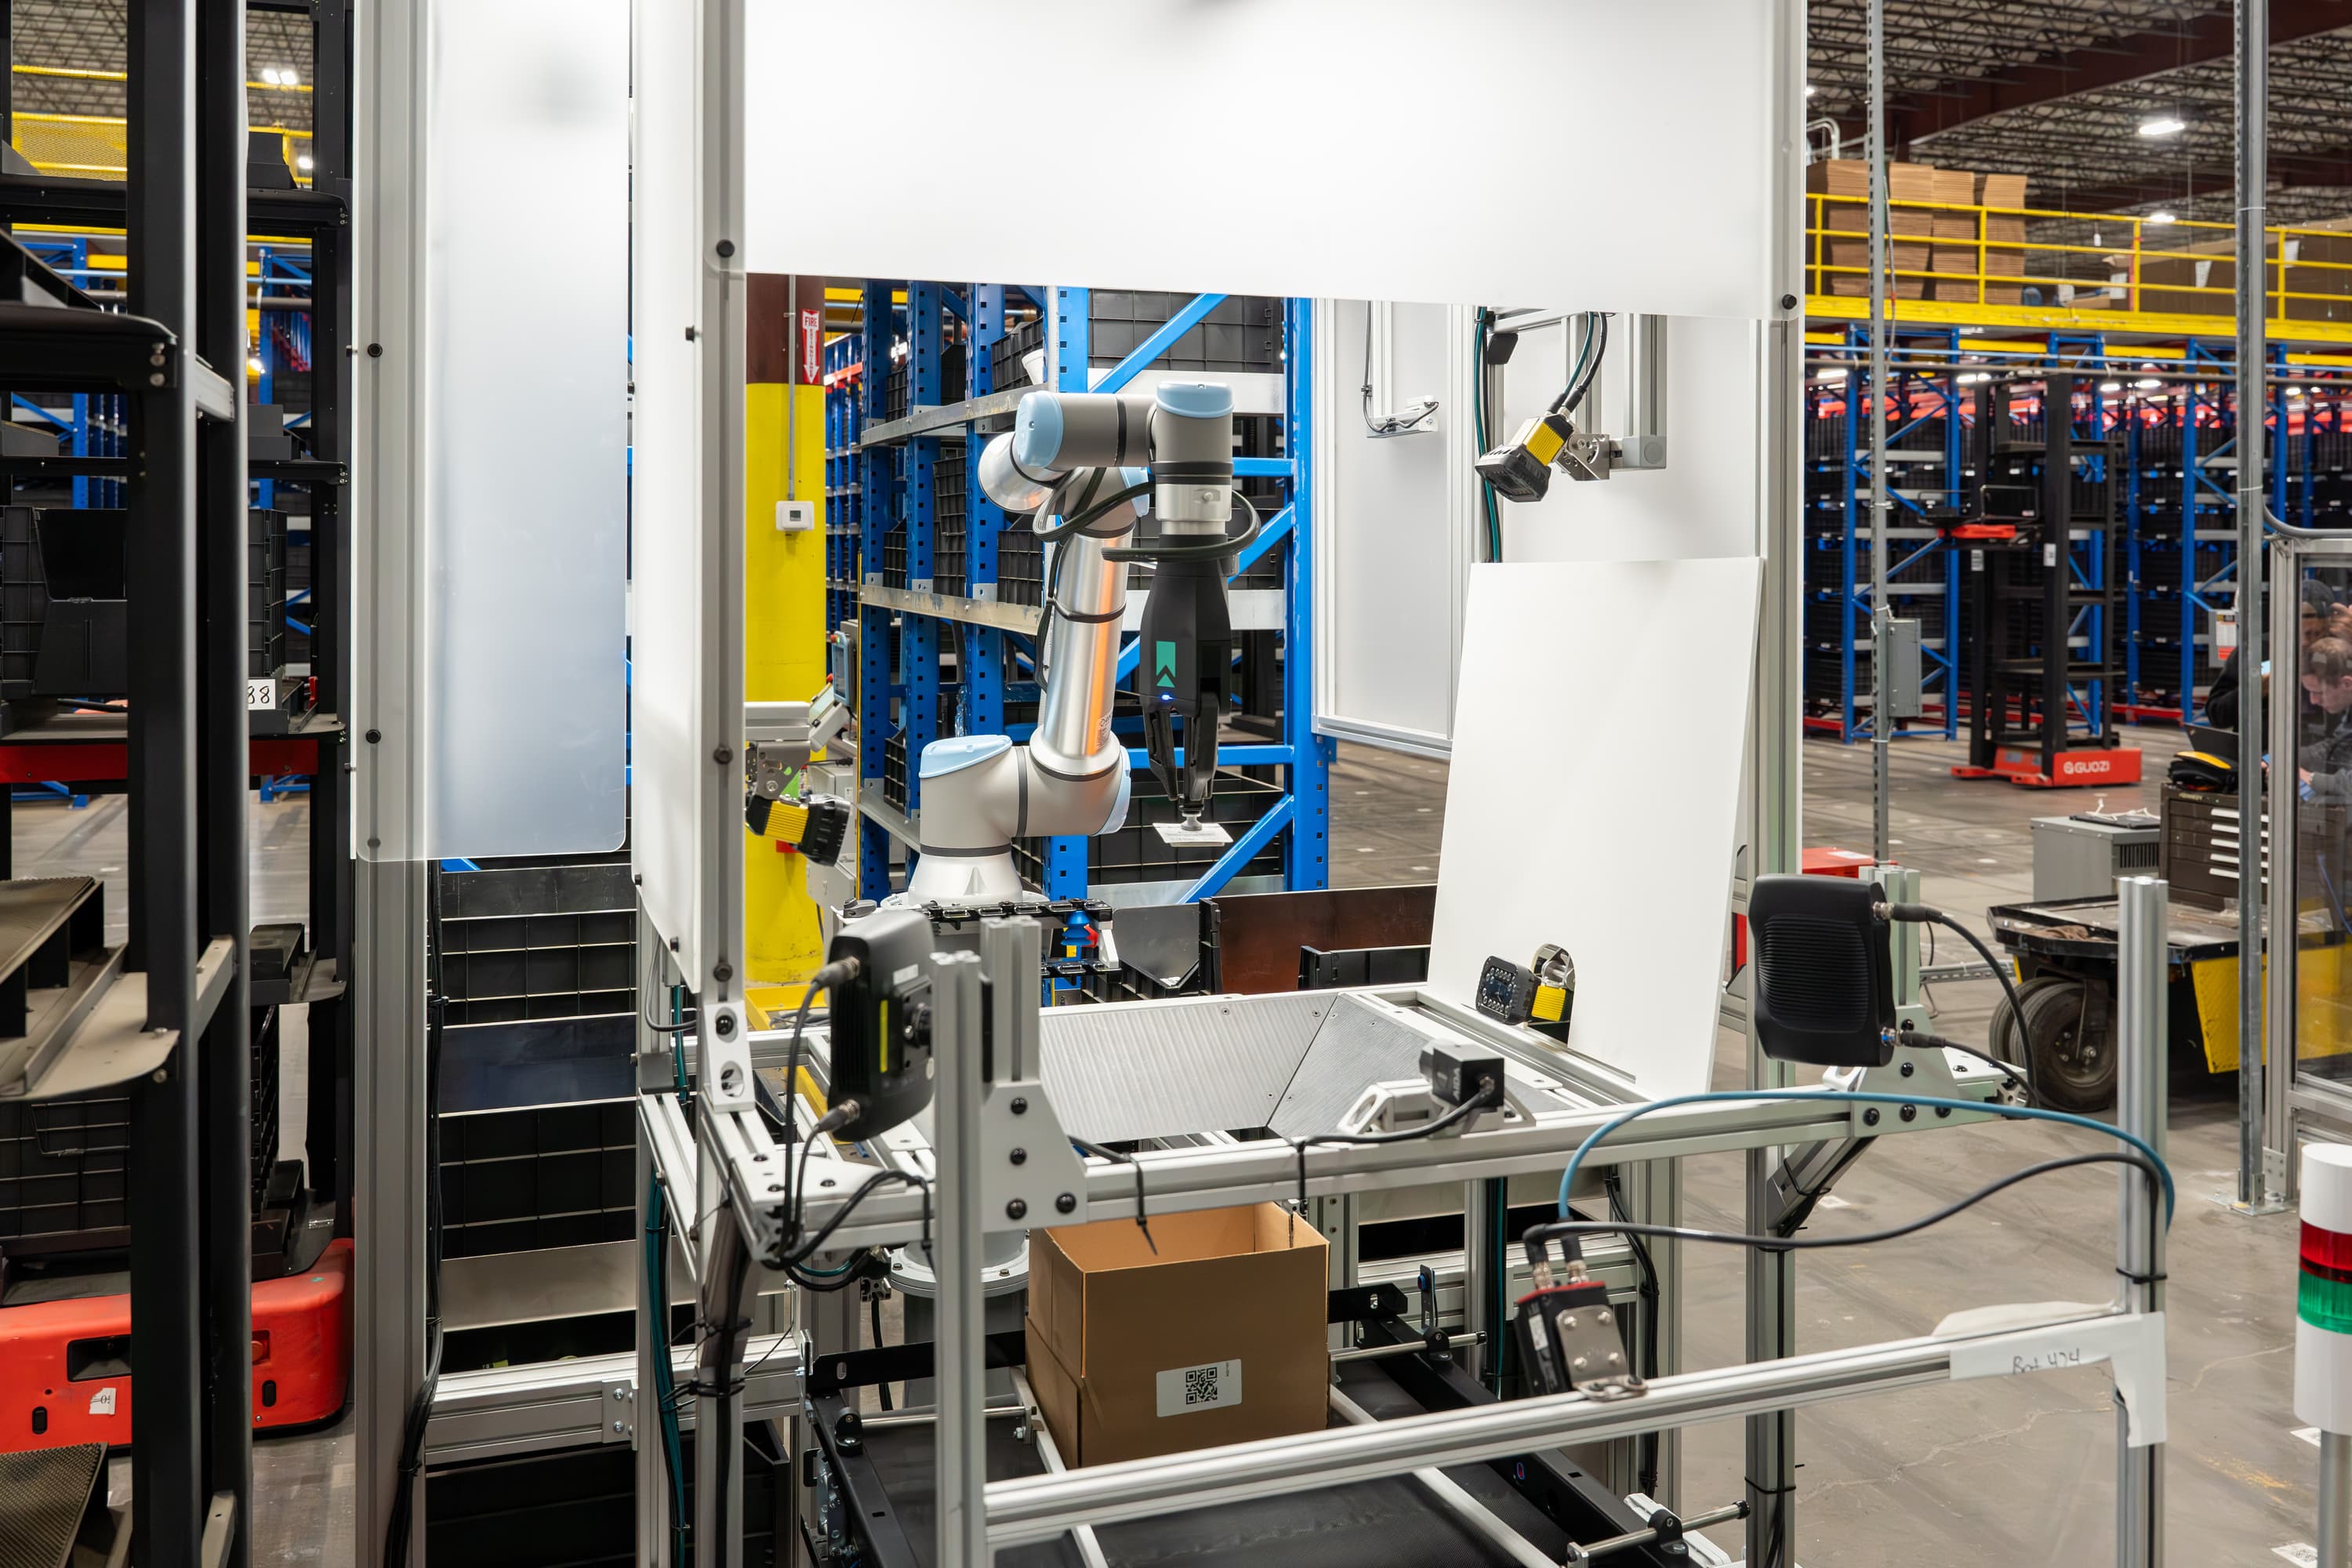 RightHand Robotics' RightPick system at Staples Warehouse